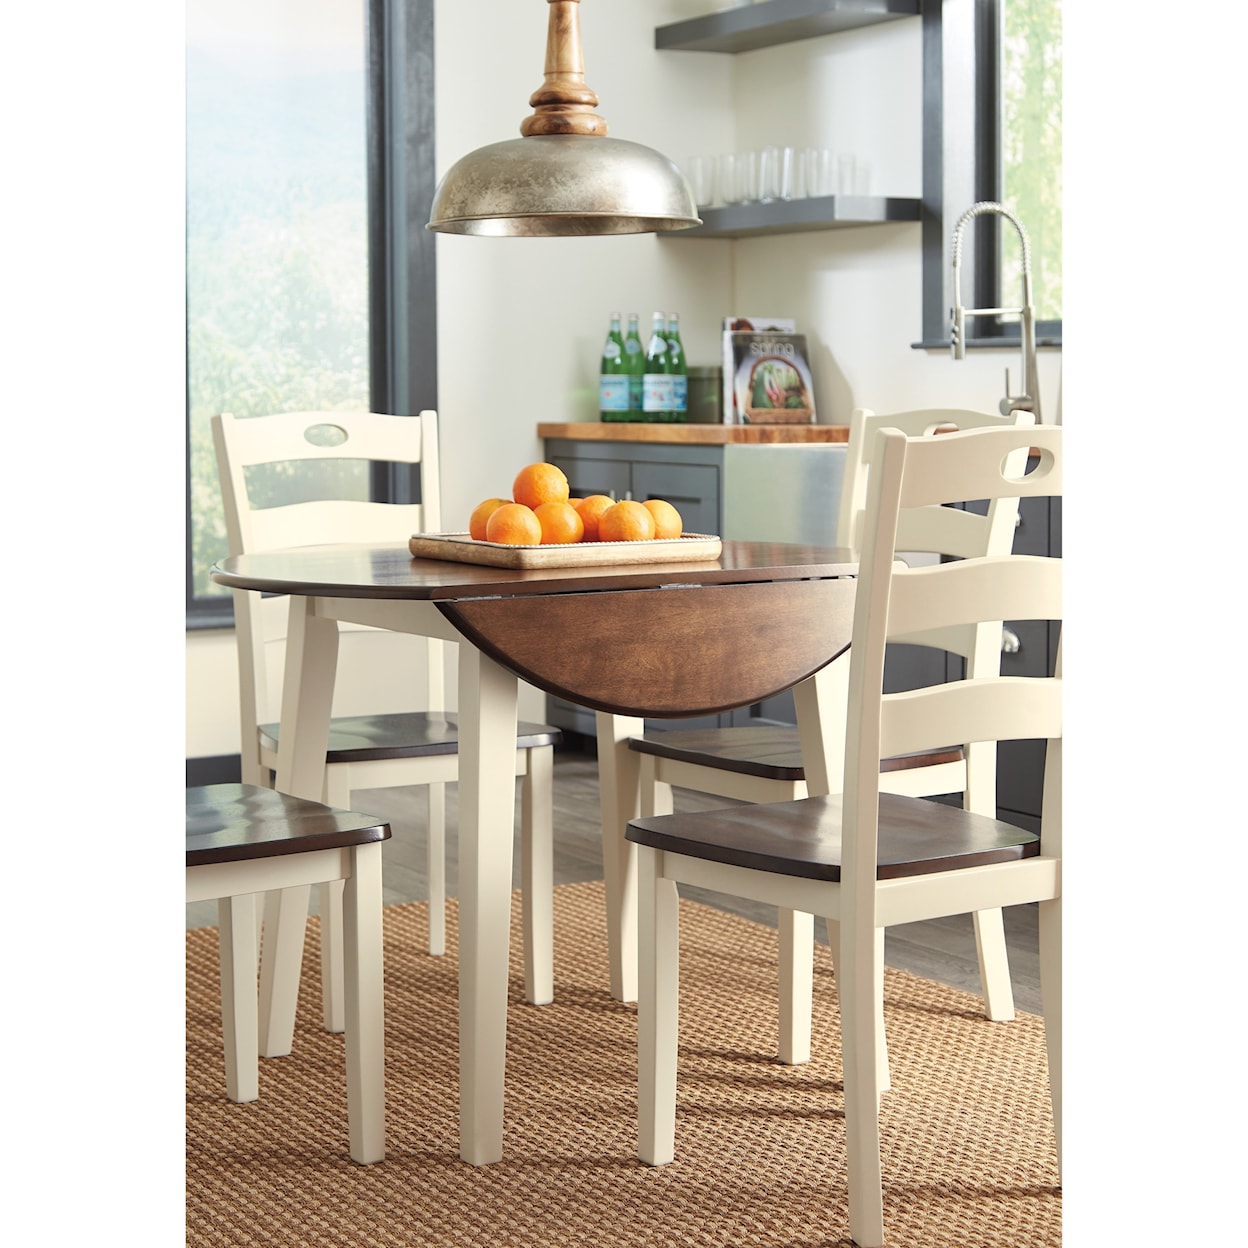 Ashley Furniture Signature Design Woodanville 5-Piece Round Drop Leaf Table Set